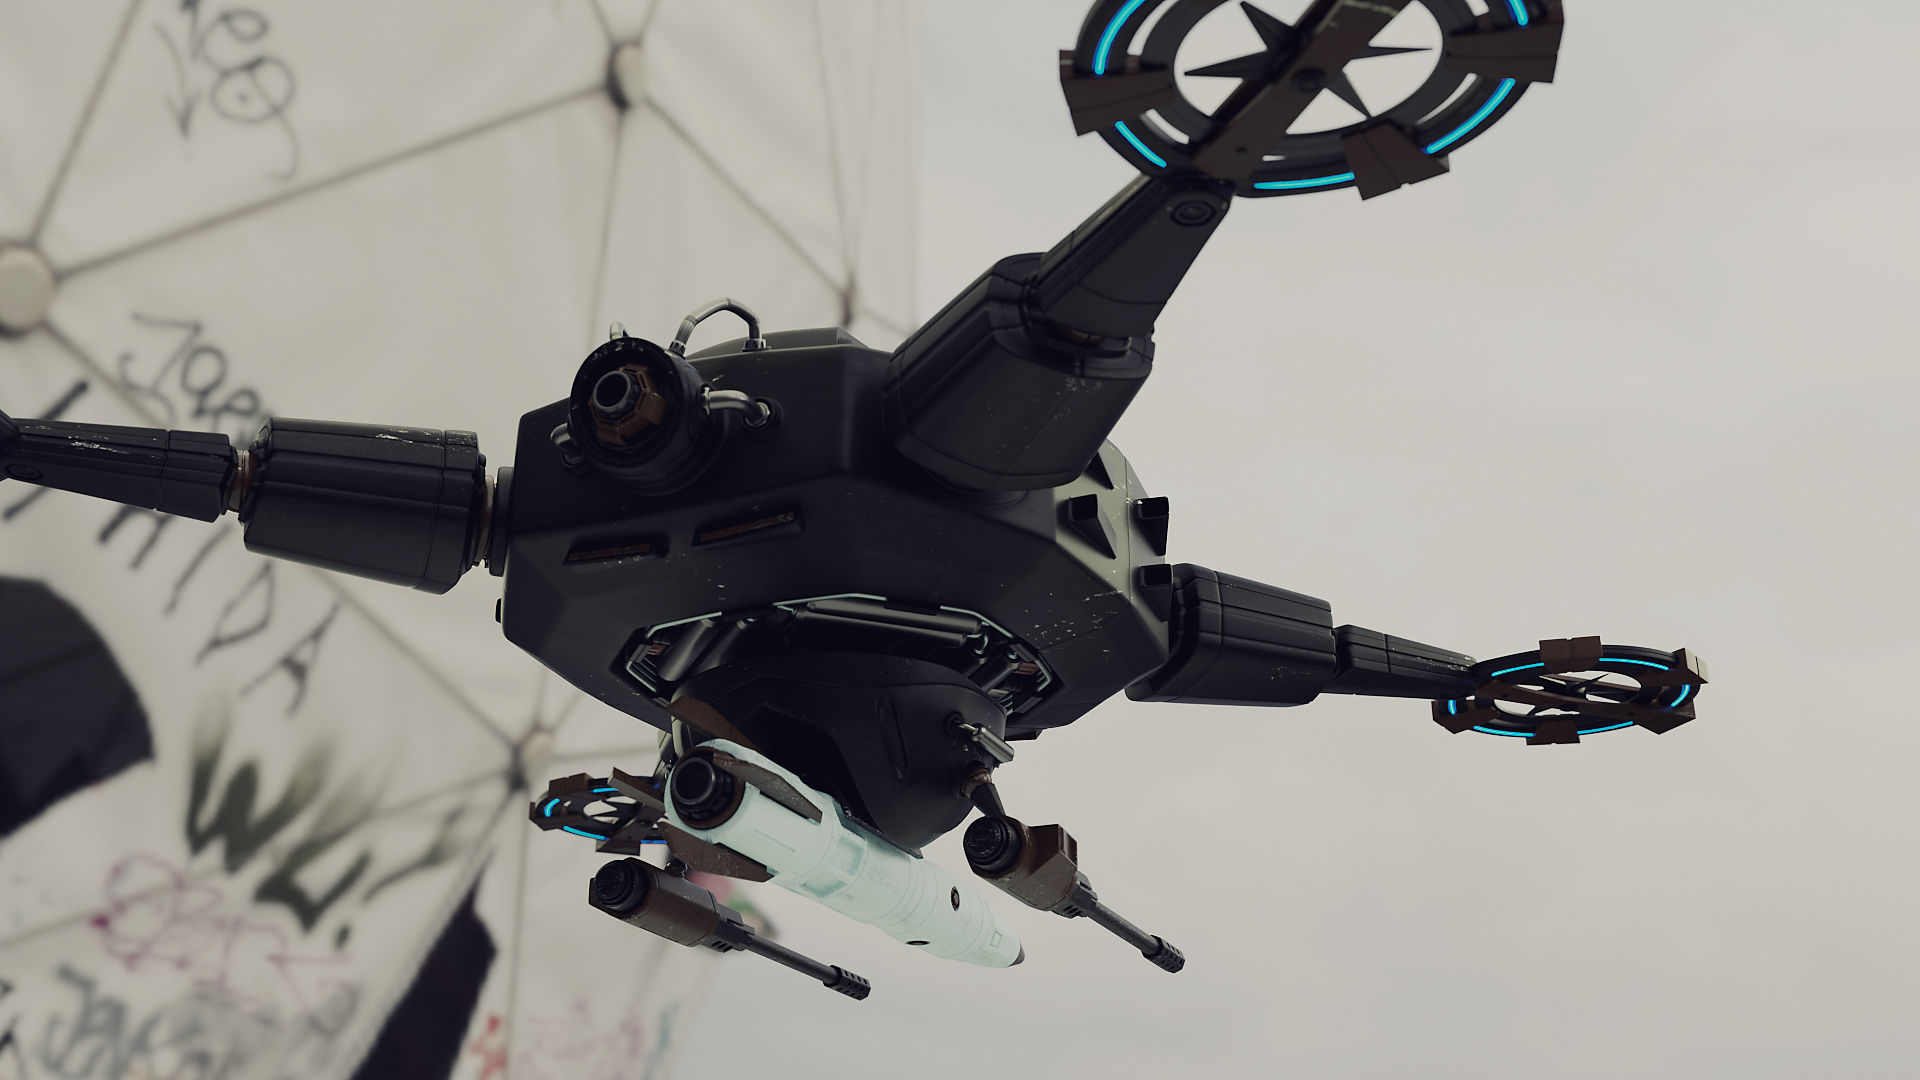 10 - A sci-fi drone concept - Sonny Nguyen